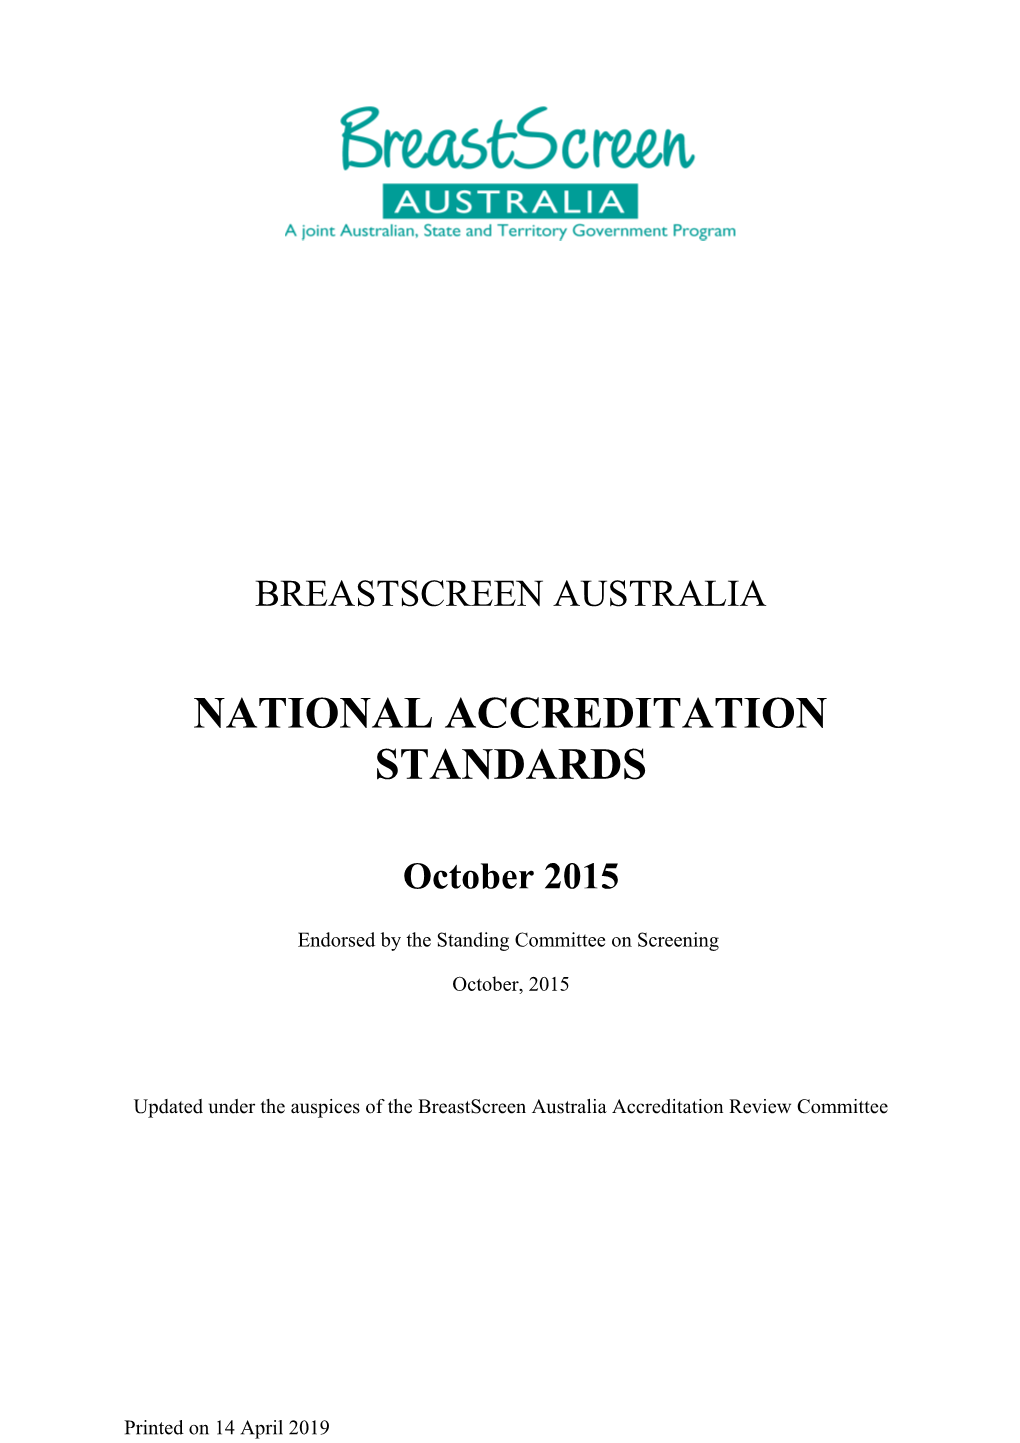 Breastscreen Australia National Accreditation Standards Commentary October 2015